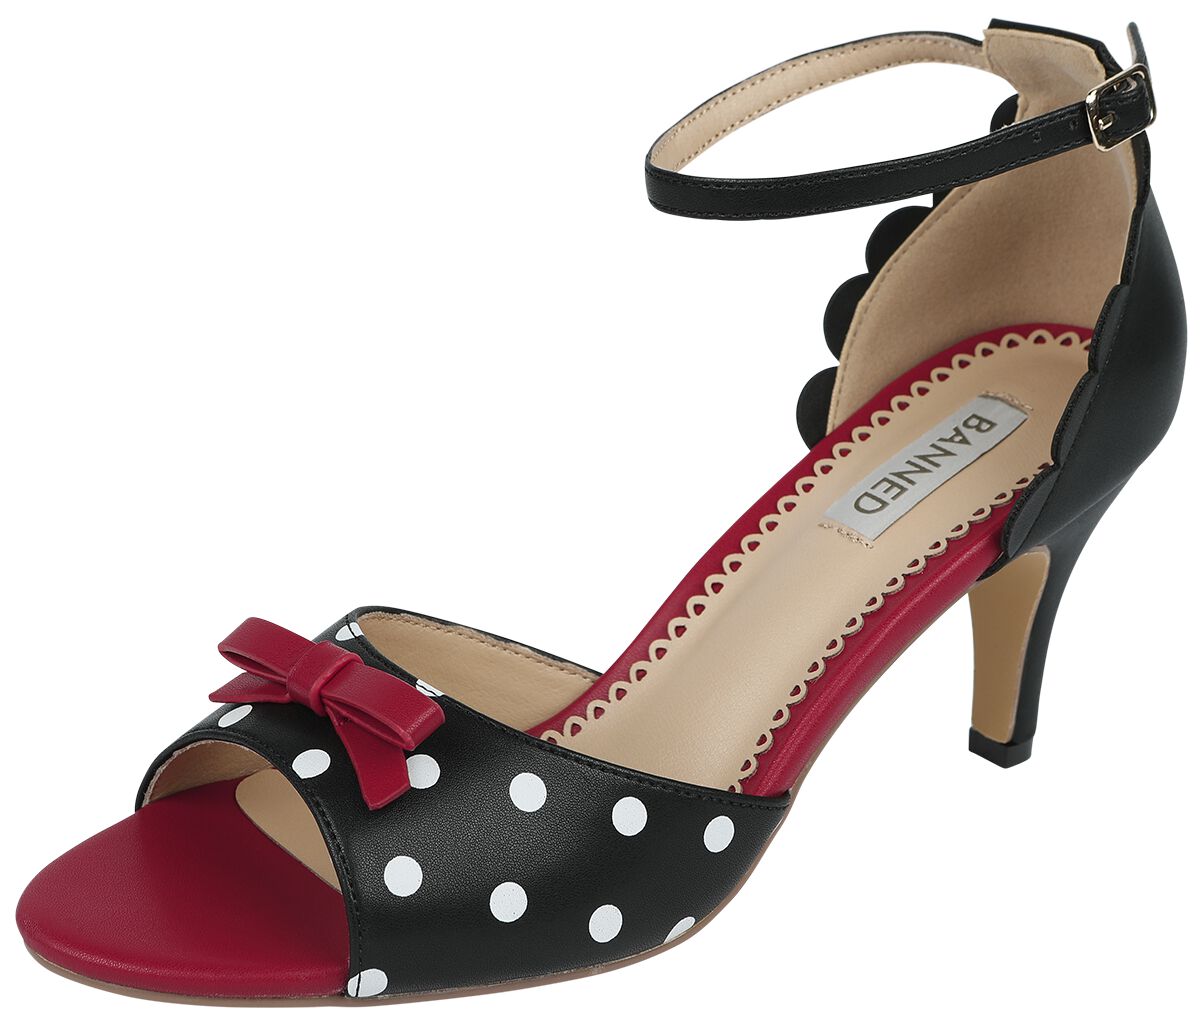 Banned Retro Poppy Polka Open Toe Sandals High Heel schwarz rot in EU40